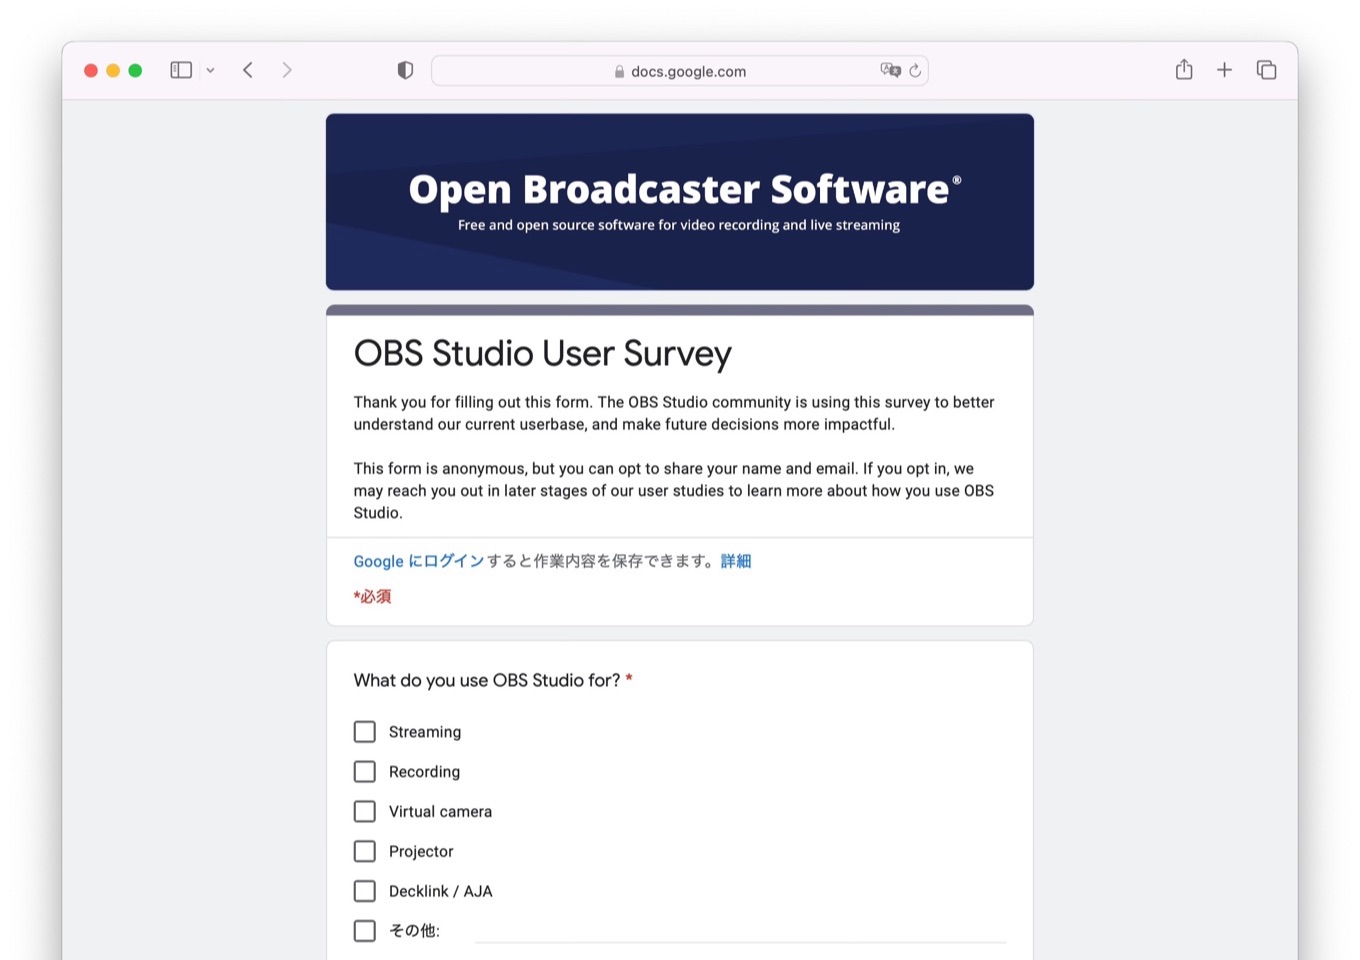 OBS Studio User Survey Google Forms